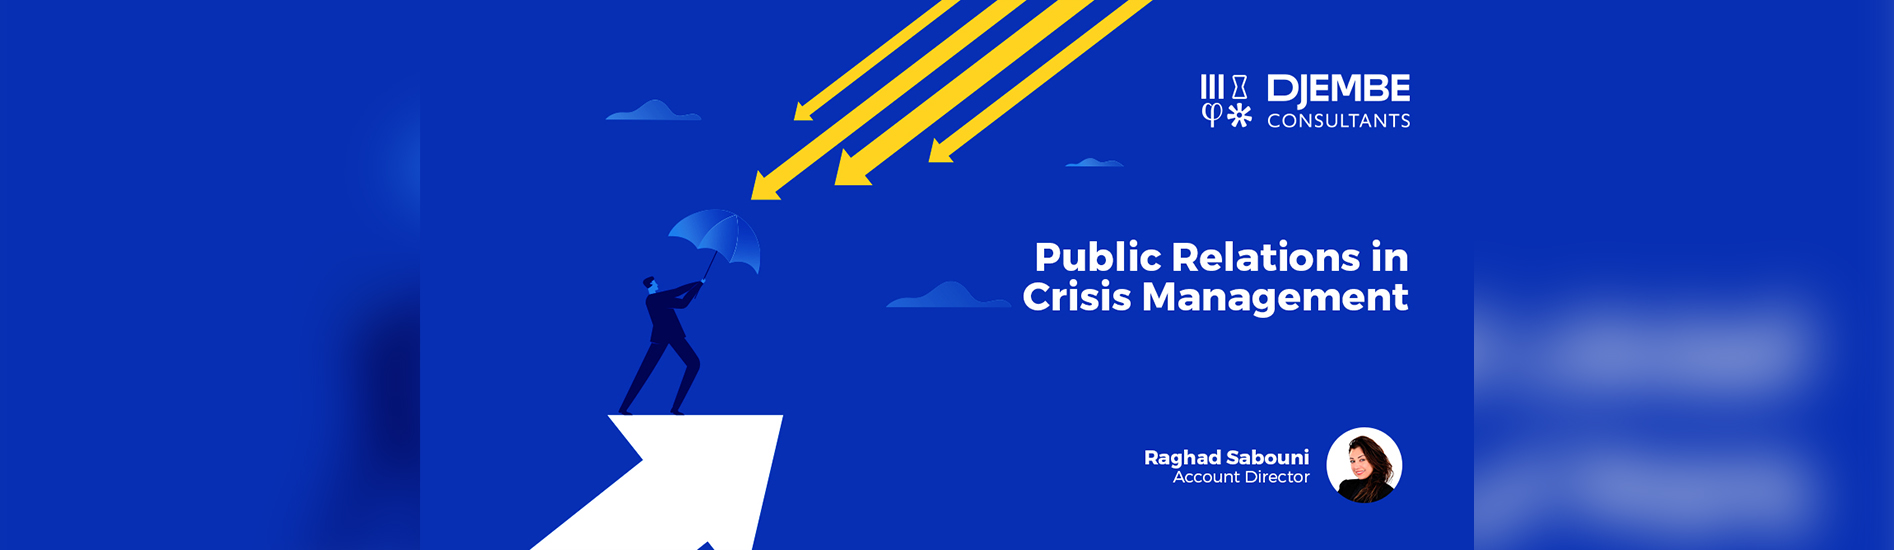 Public Relations in Crisis Management